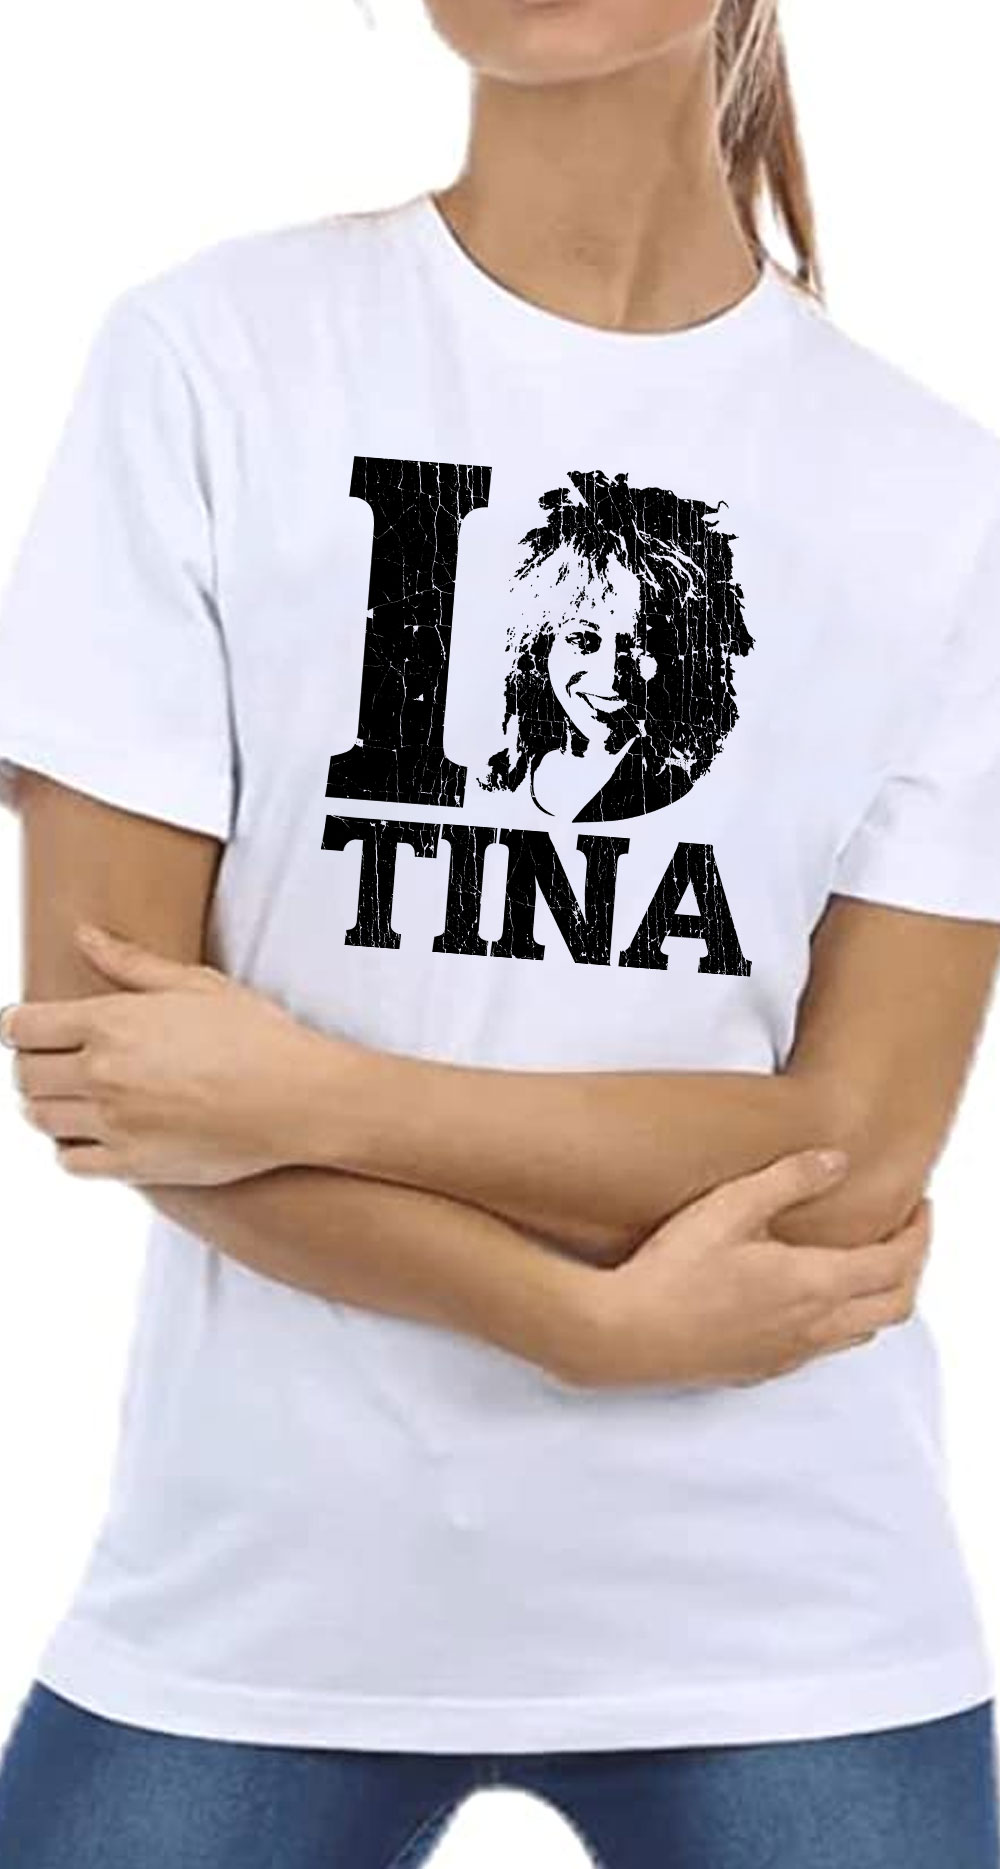 I love Tina Turner muzyczna koszulka dla fana